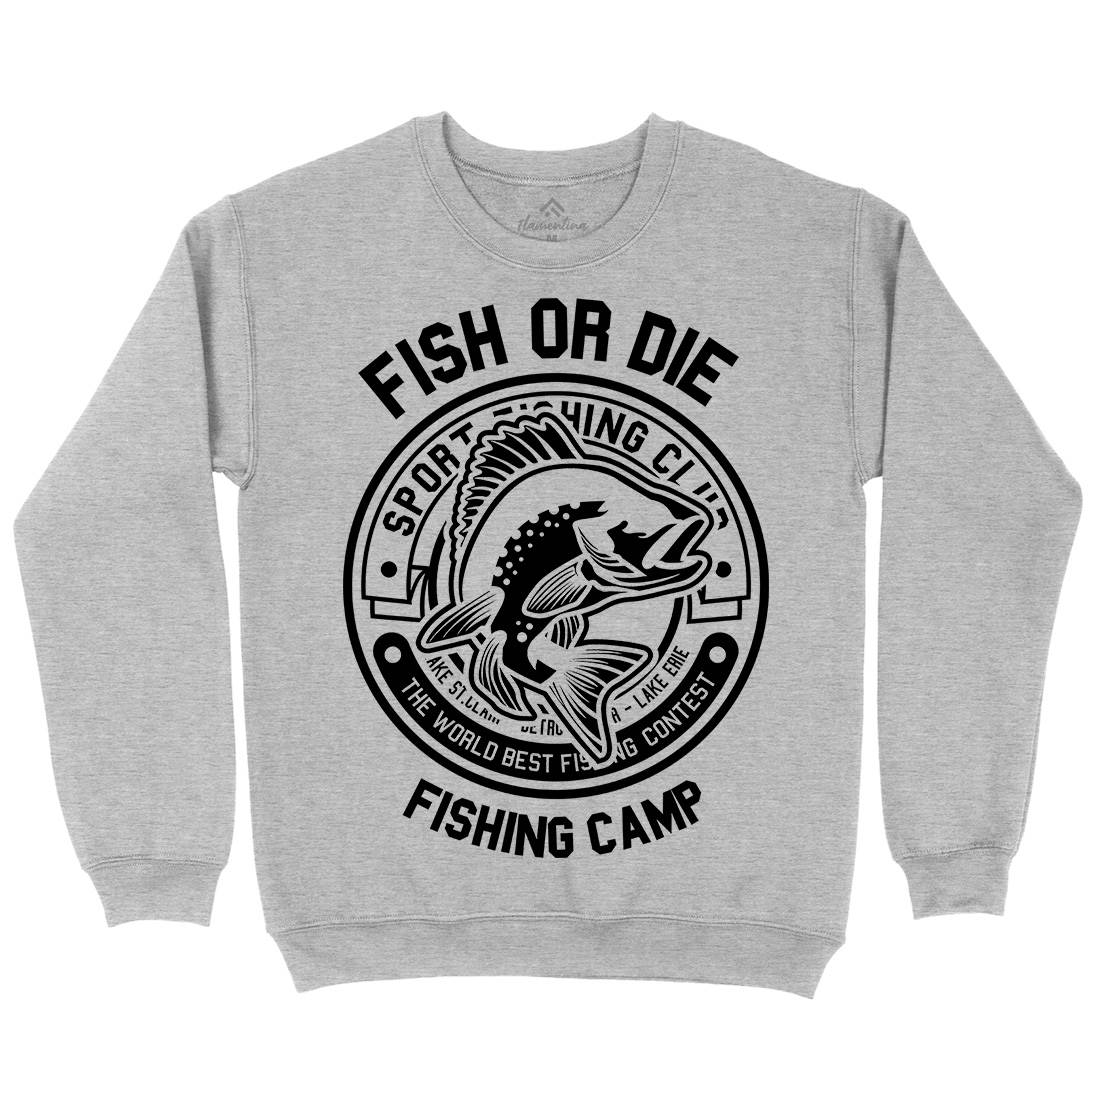 Fish Or Die Kids Crew Neck Sweatshirt Fishing B538